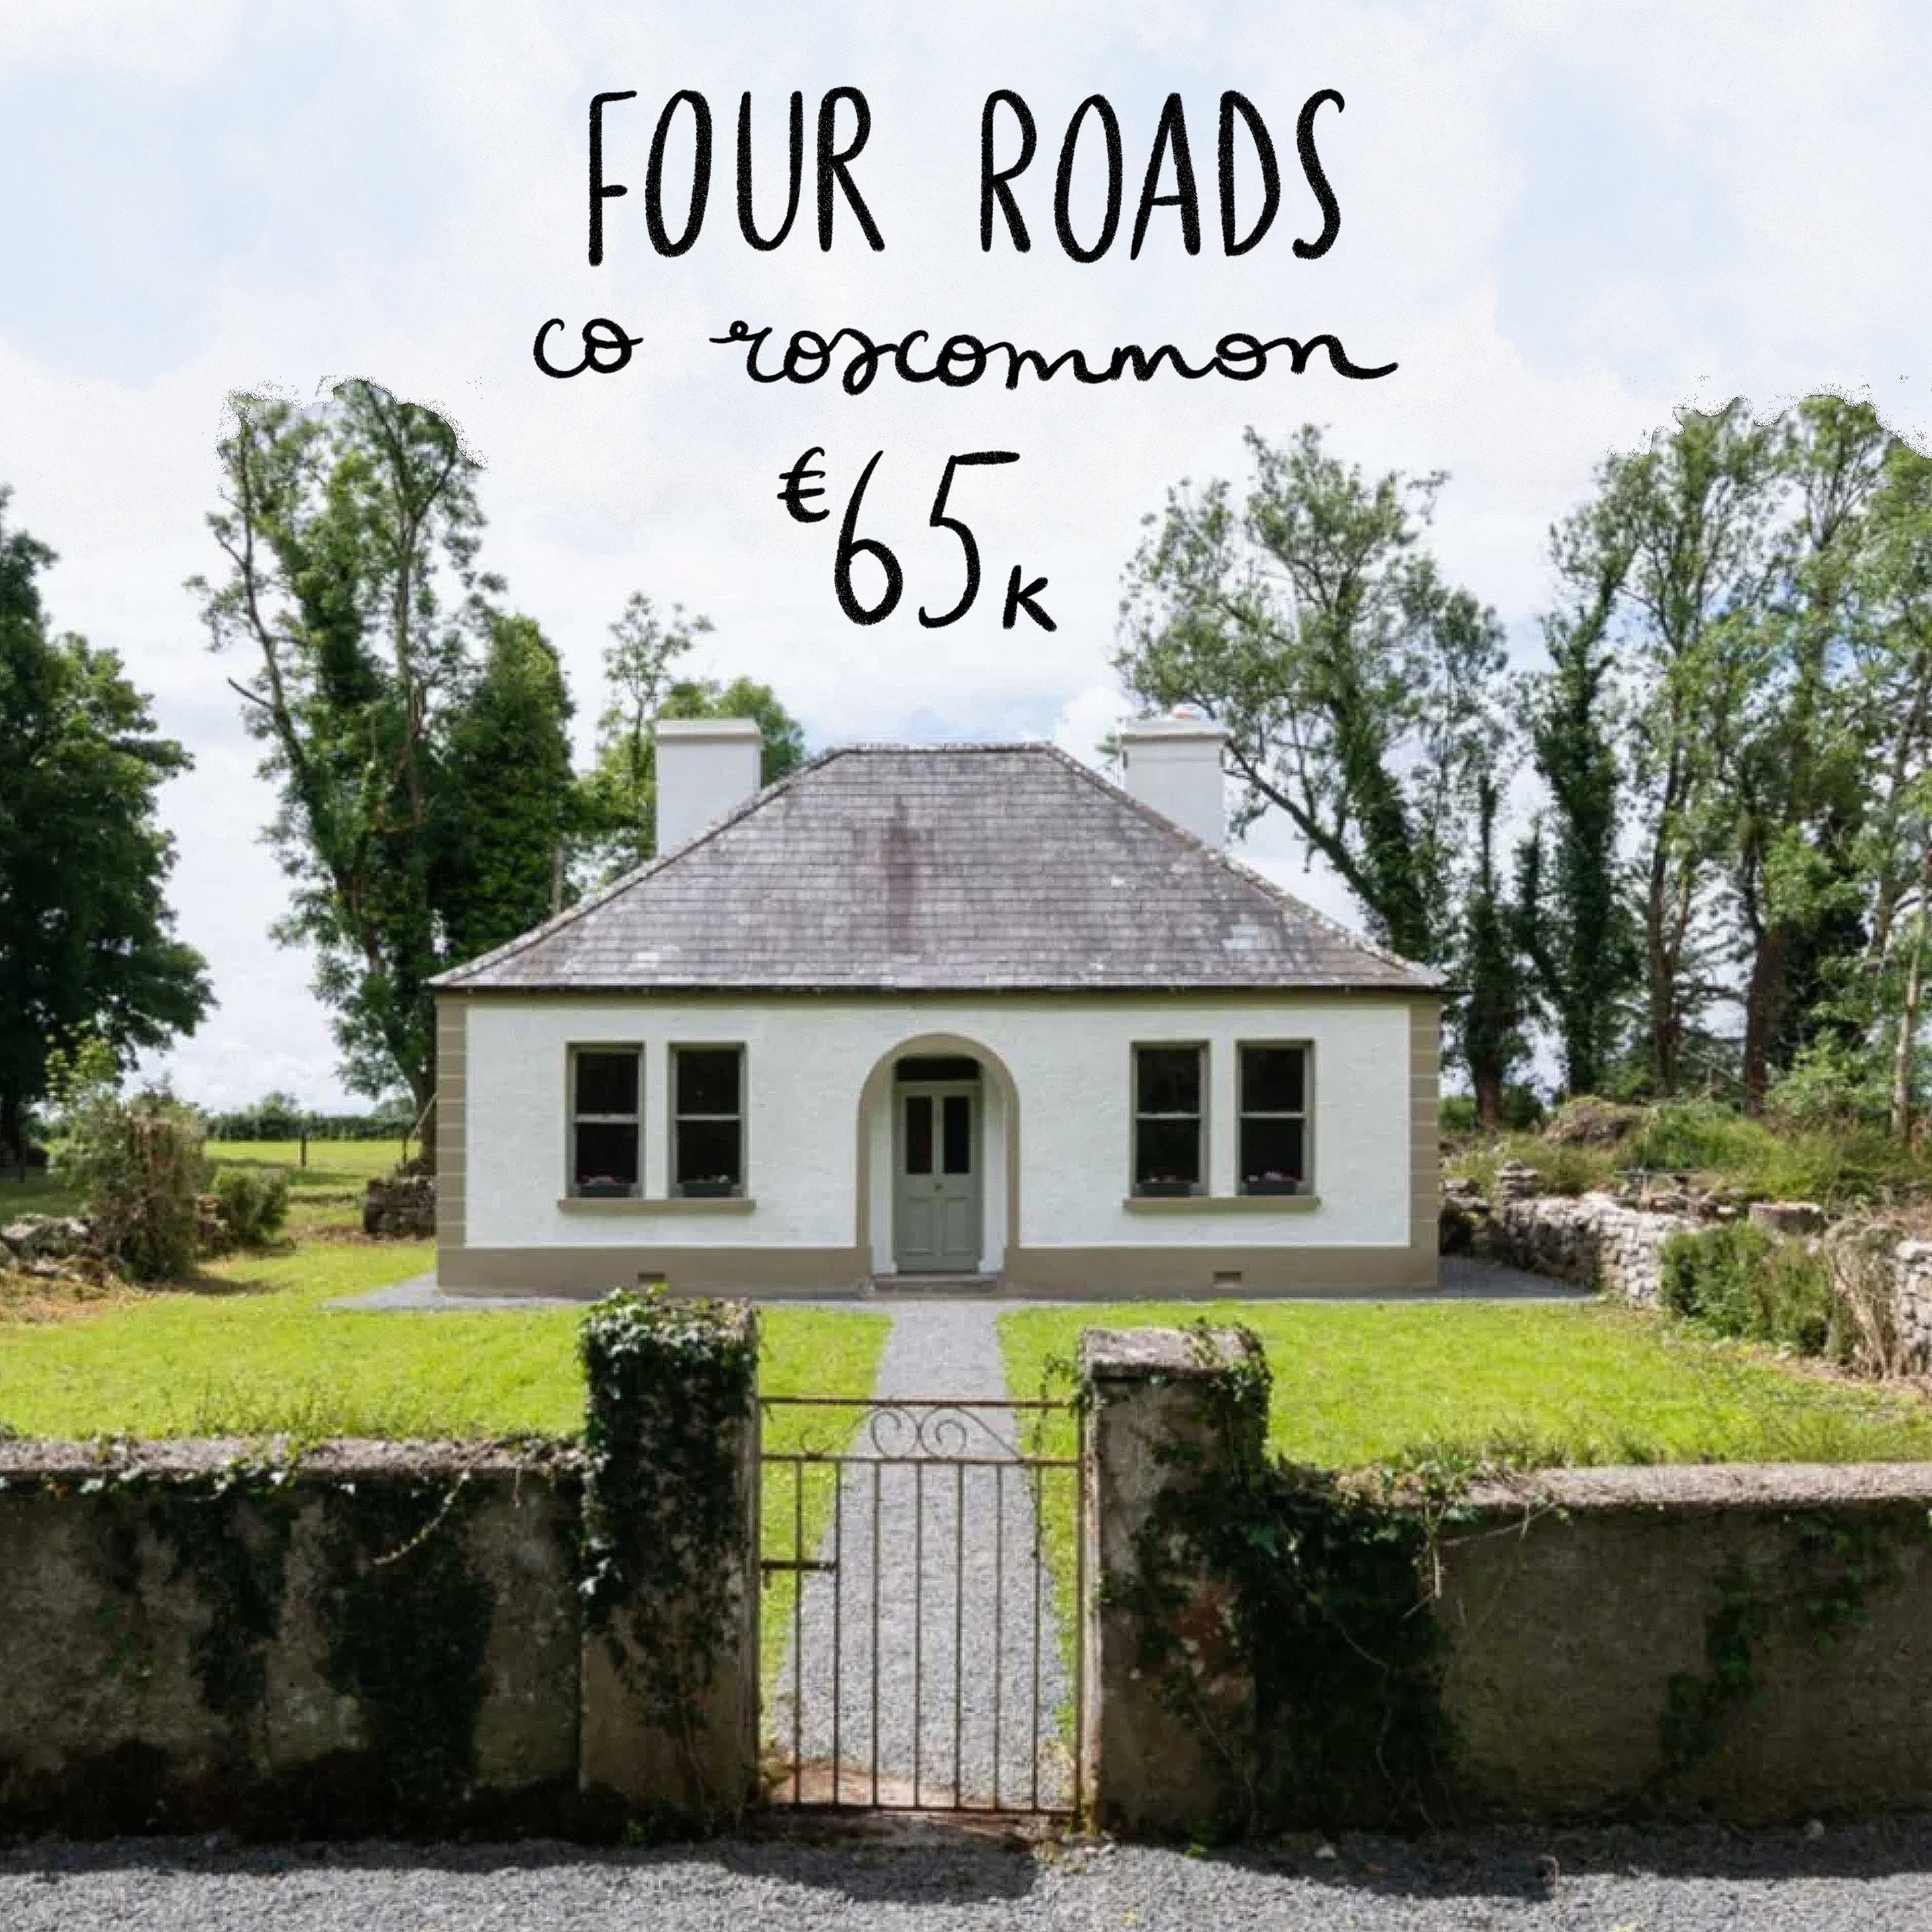 Cloghnashade, Four Roads, Co. Roscommon. €65k